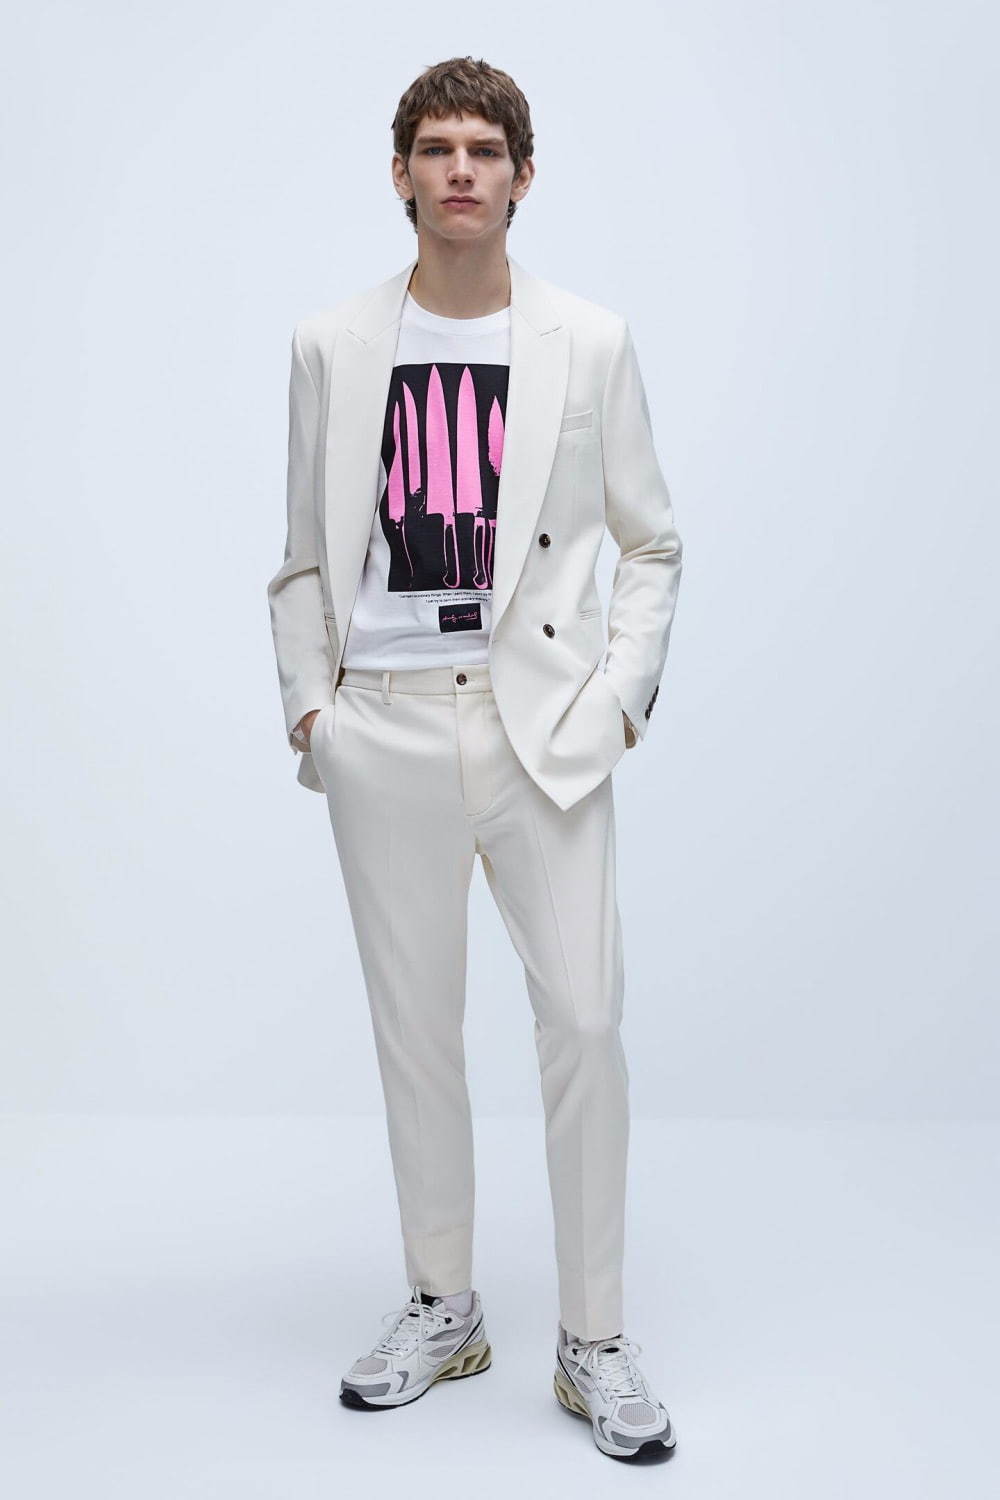 Zara Man アンディ ウォーホルから ポップ アート ナイフ スカルのプリントtシャツなど ファッションプレス